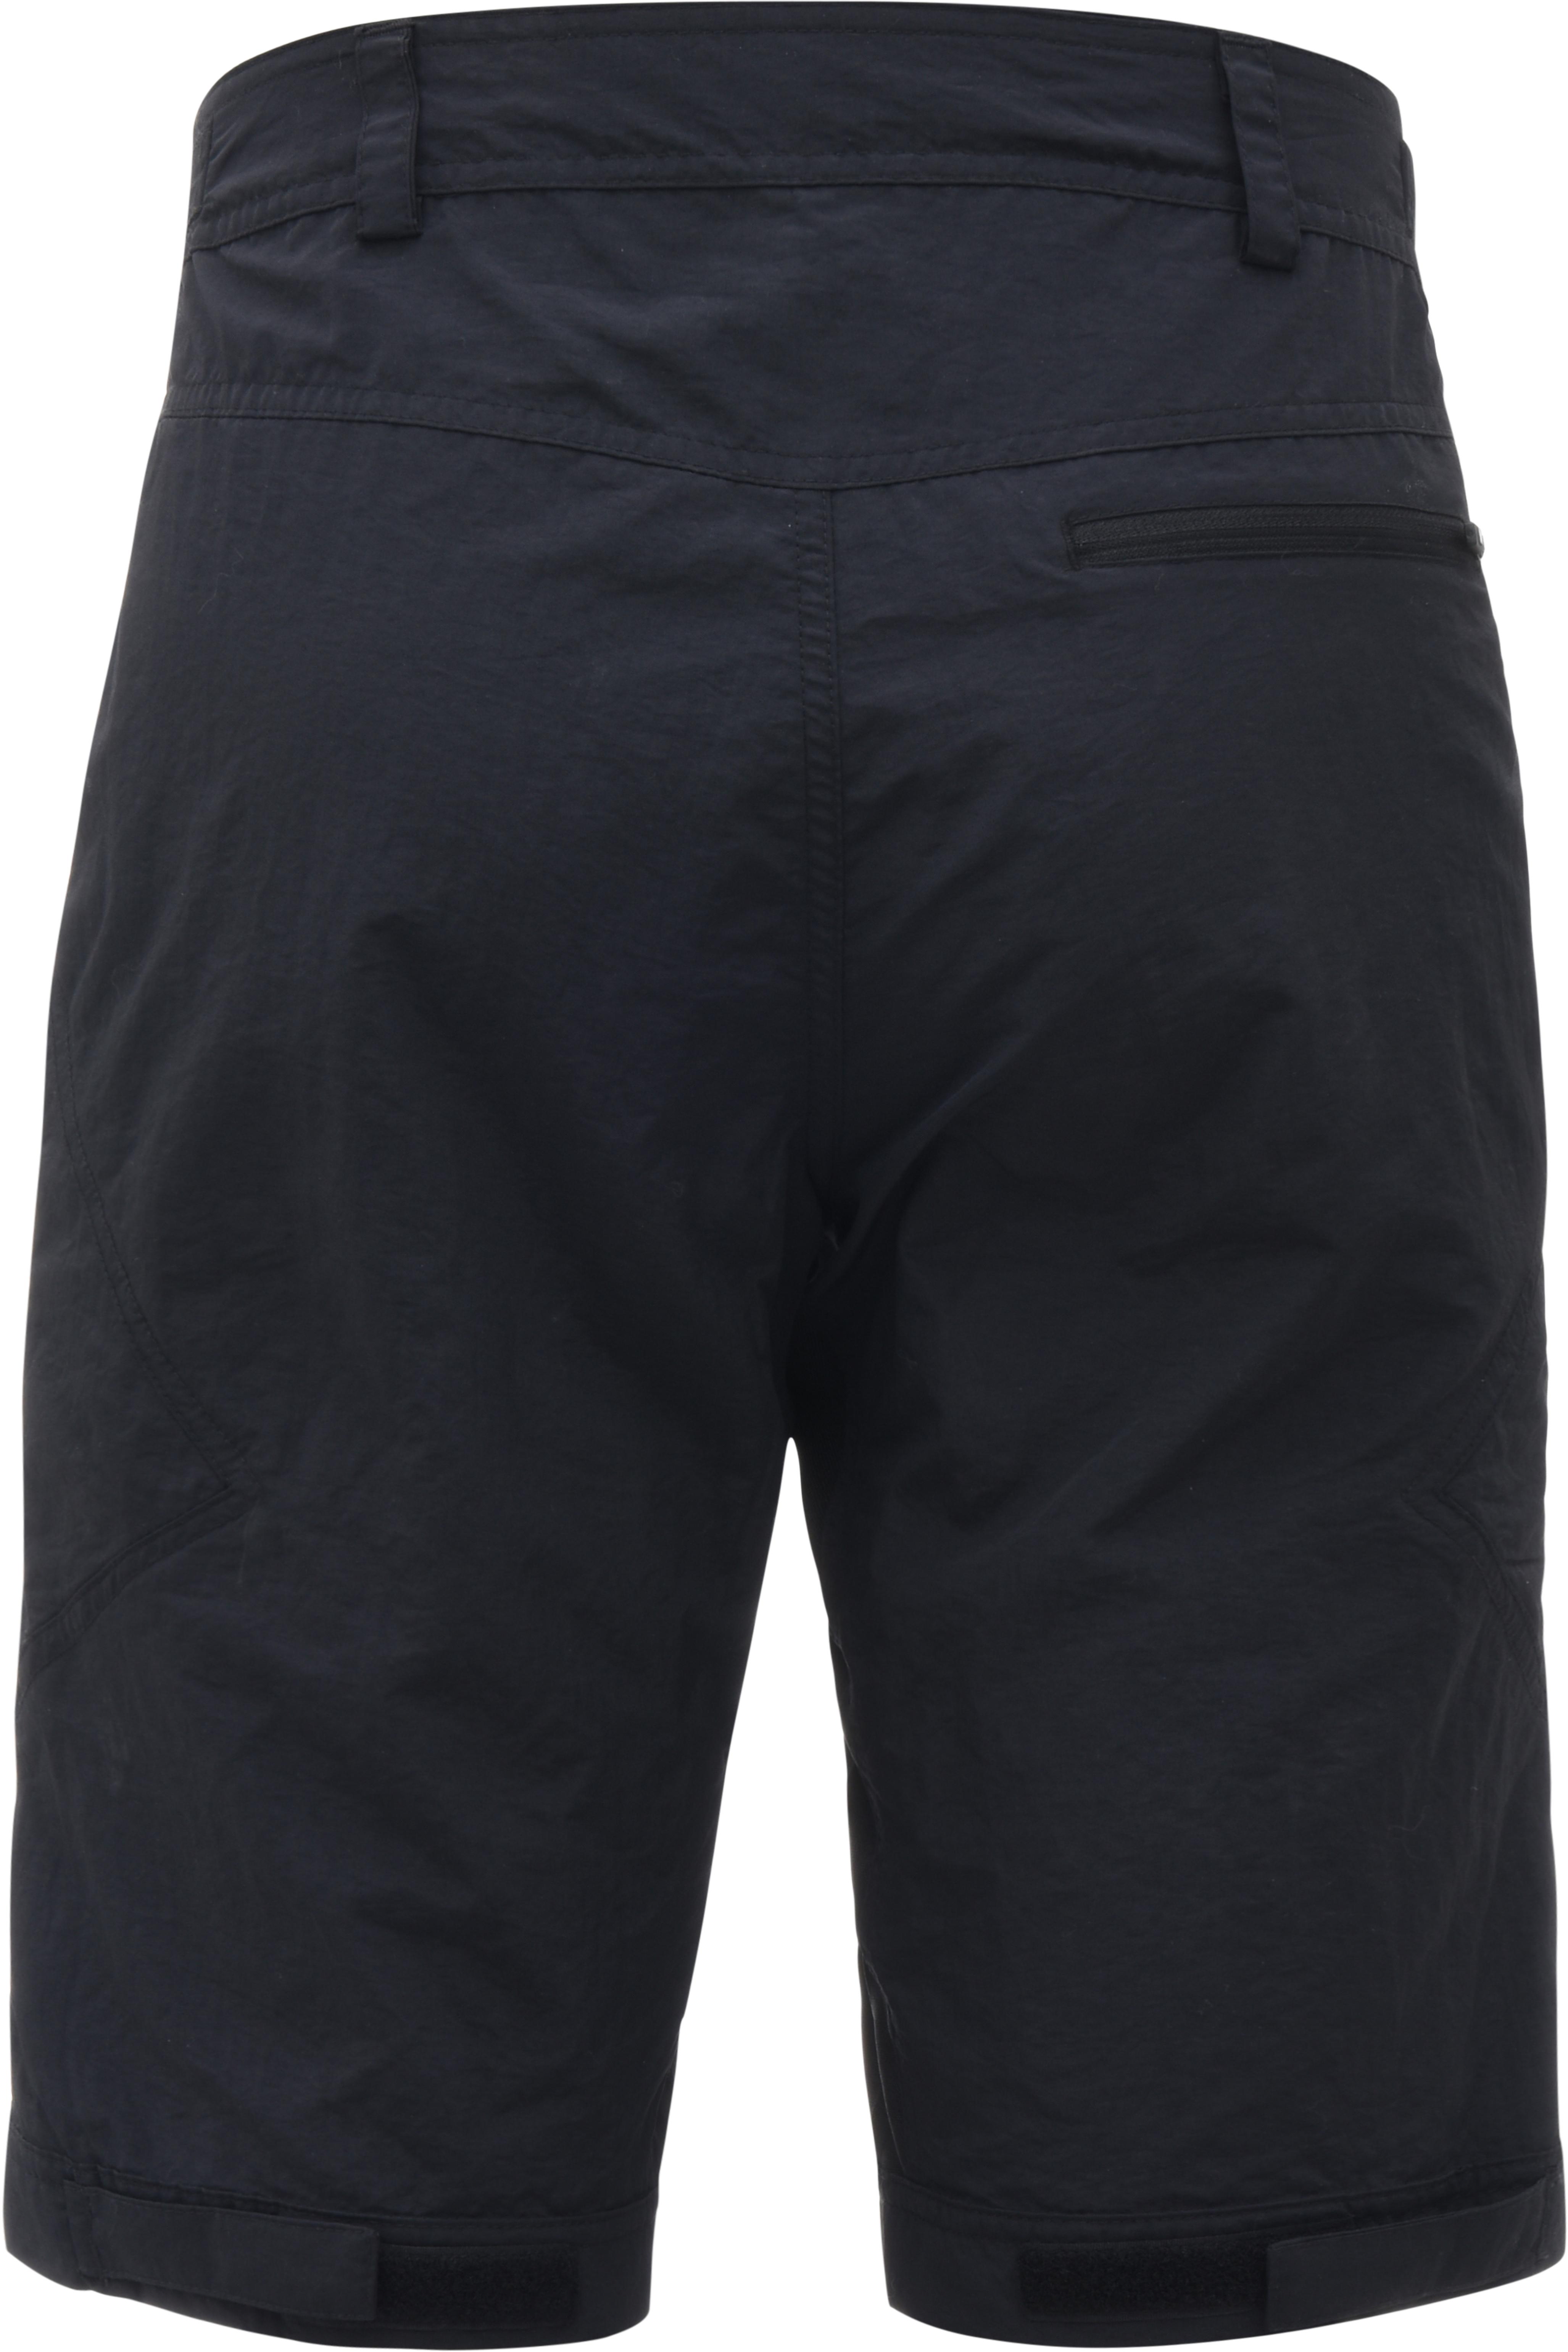 boardman mtb water resistant shorts